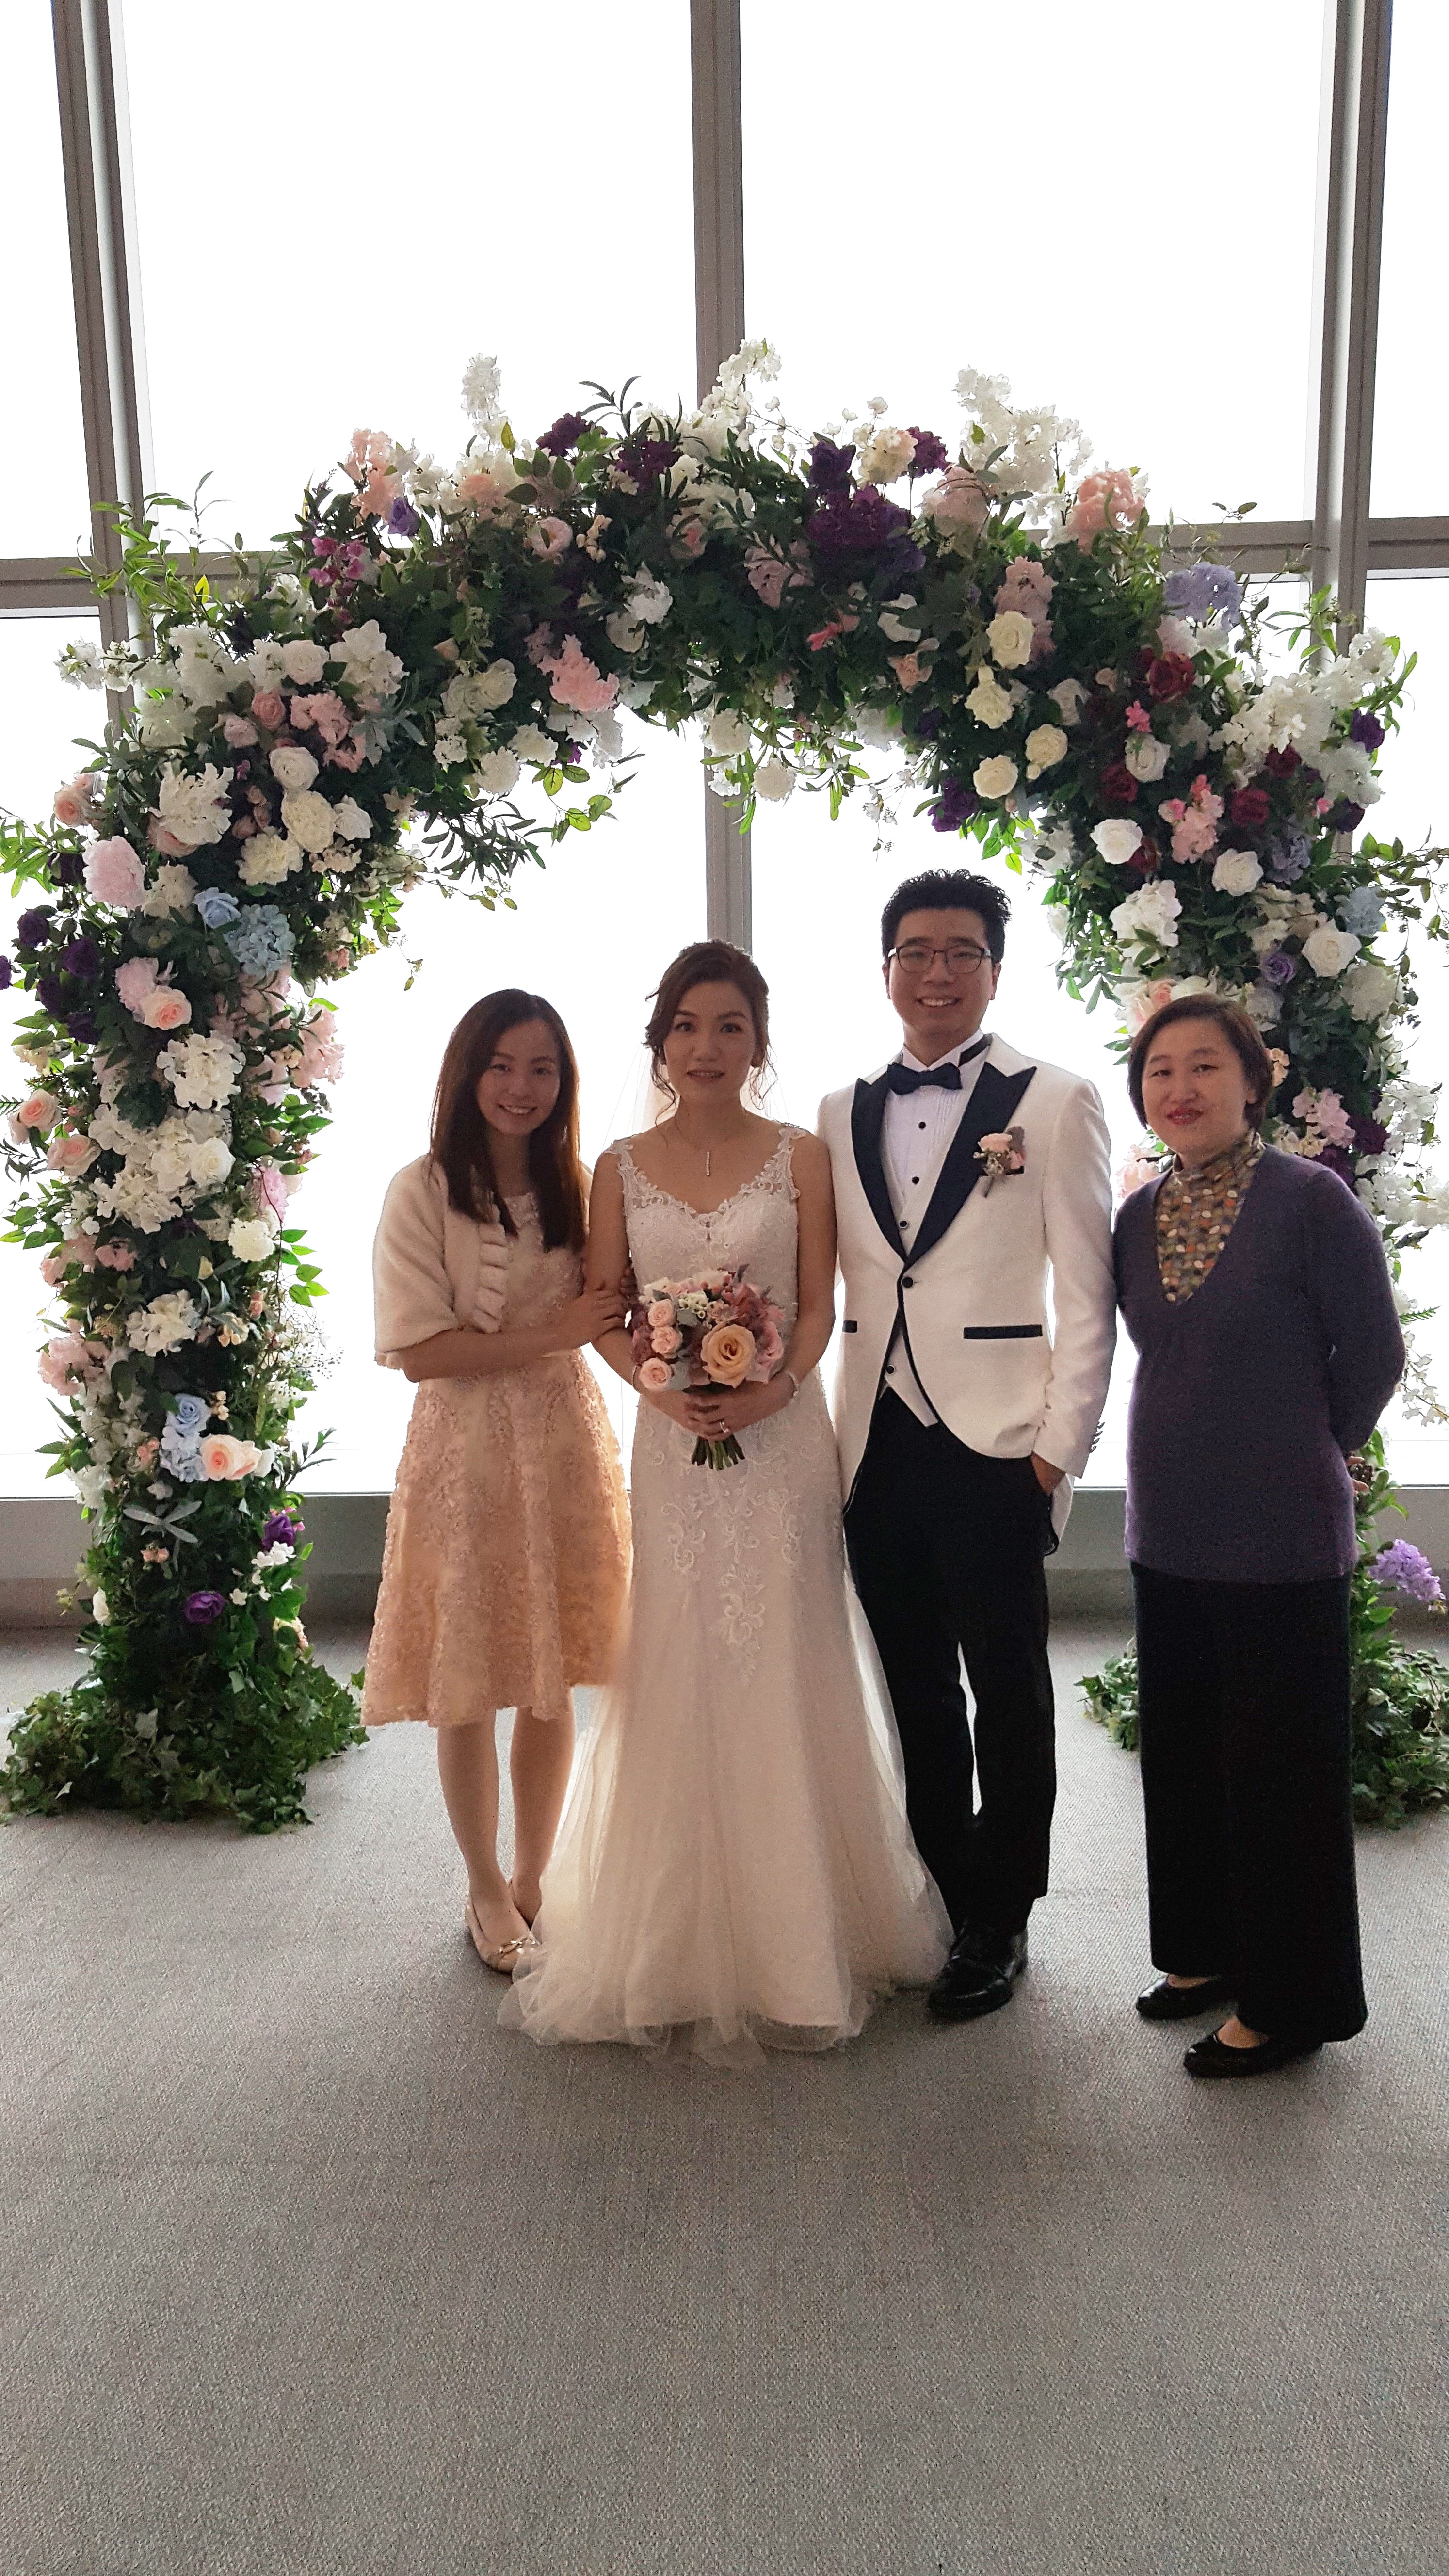 Bless Wedding 首席婚禮統籌及司儀 Angel Leung婚禮統籌師工作紀錄: 西式婚禮統籌 - 全日婚禮統籌及婚禮司儀 Wedding Planner & Wedding MC @Sky100